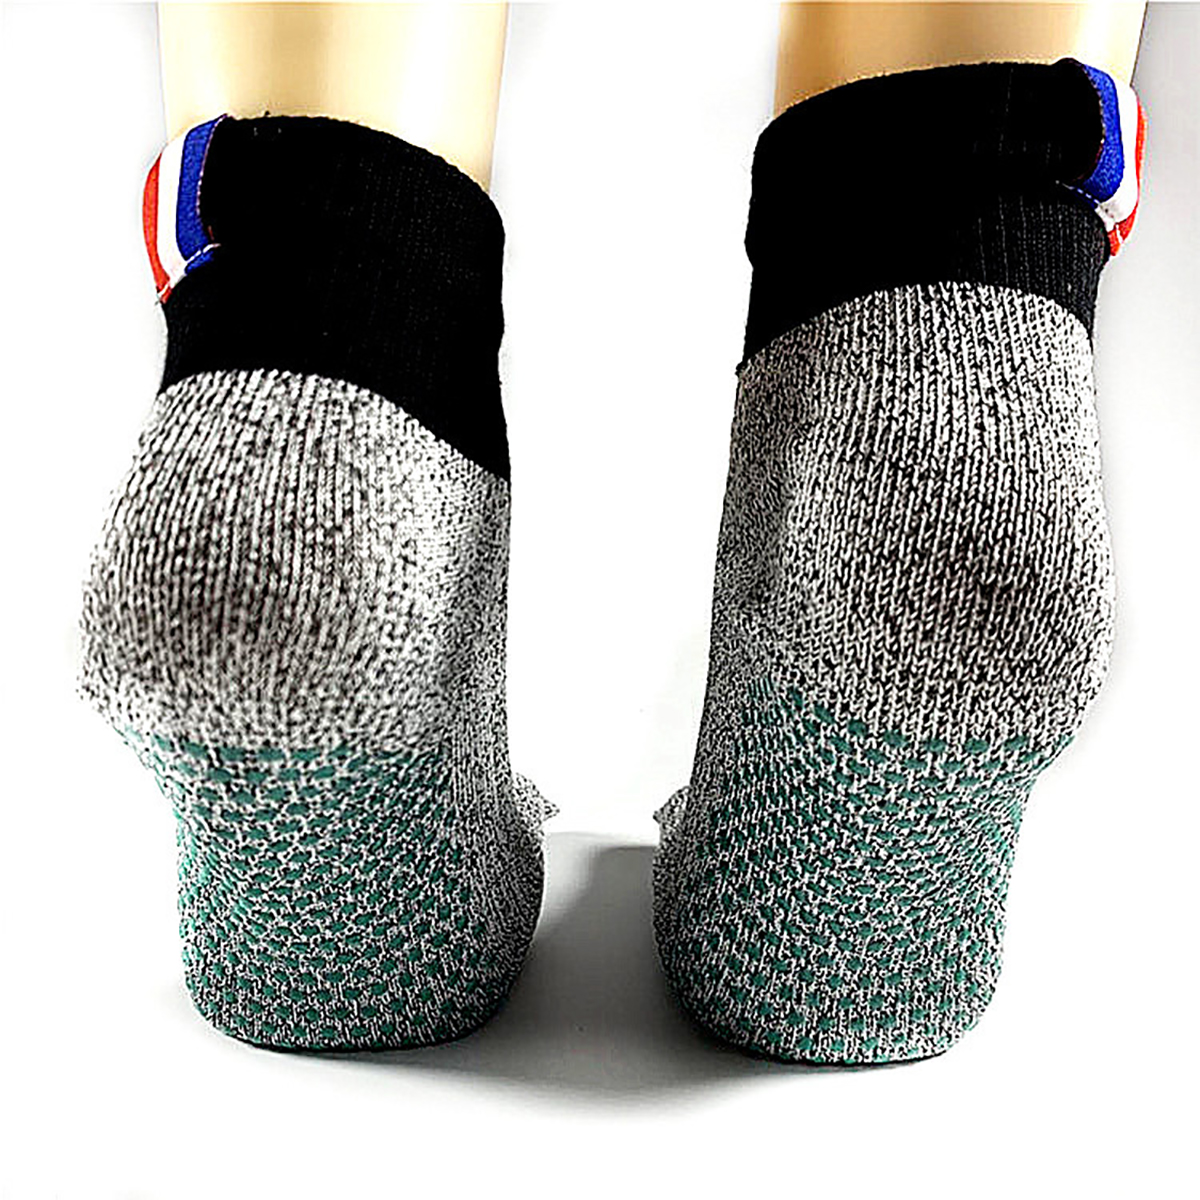 A-Pair-of-Unisex-No-Slip-Anti-Skid-Breathable-Toe-Socks-Bare-Feet-Running-Beach-HPPE-Sock-1583549-5